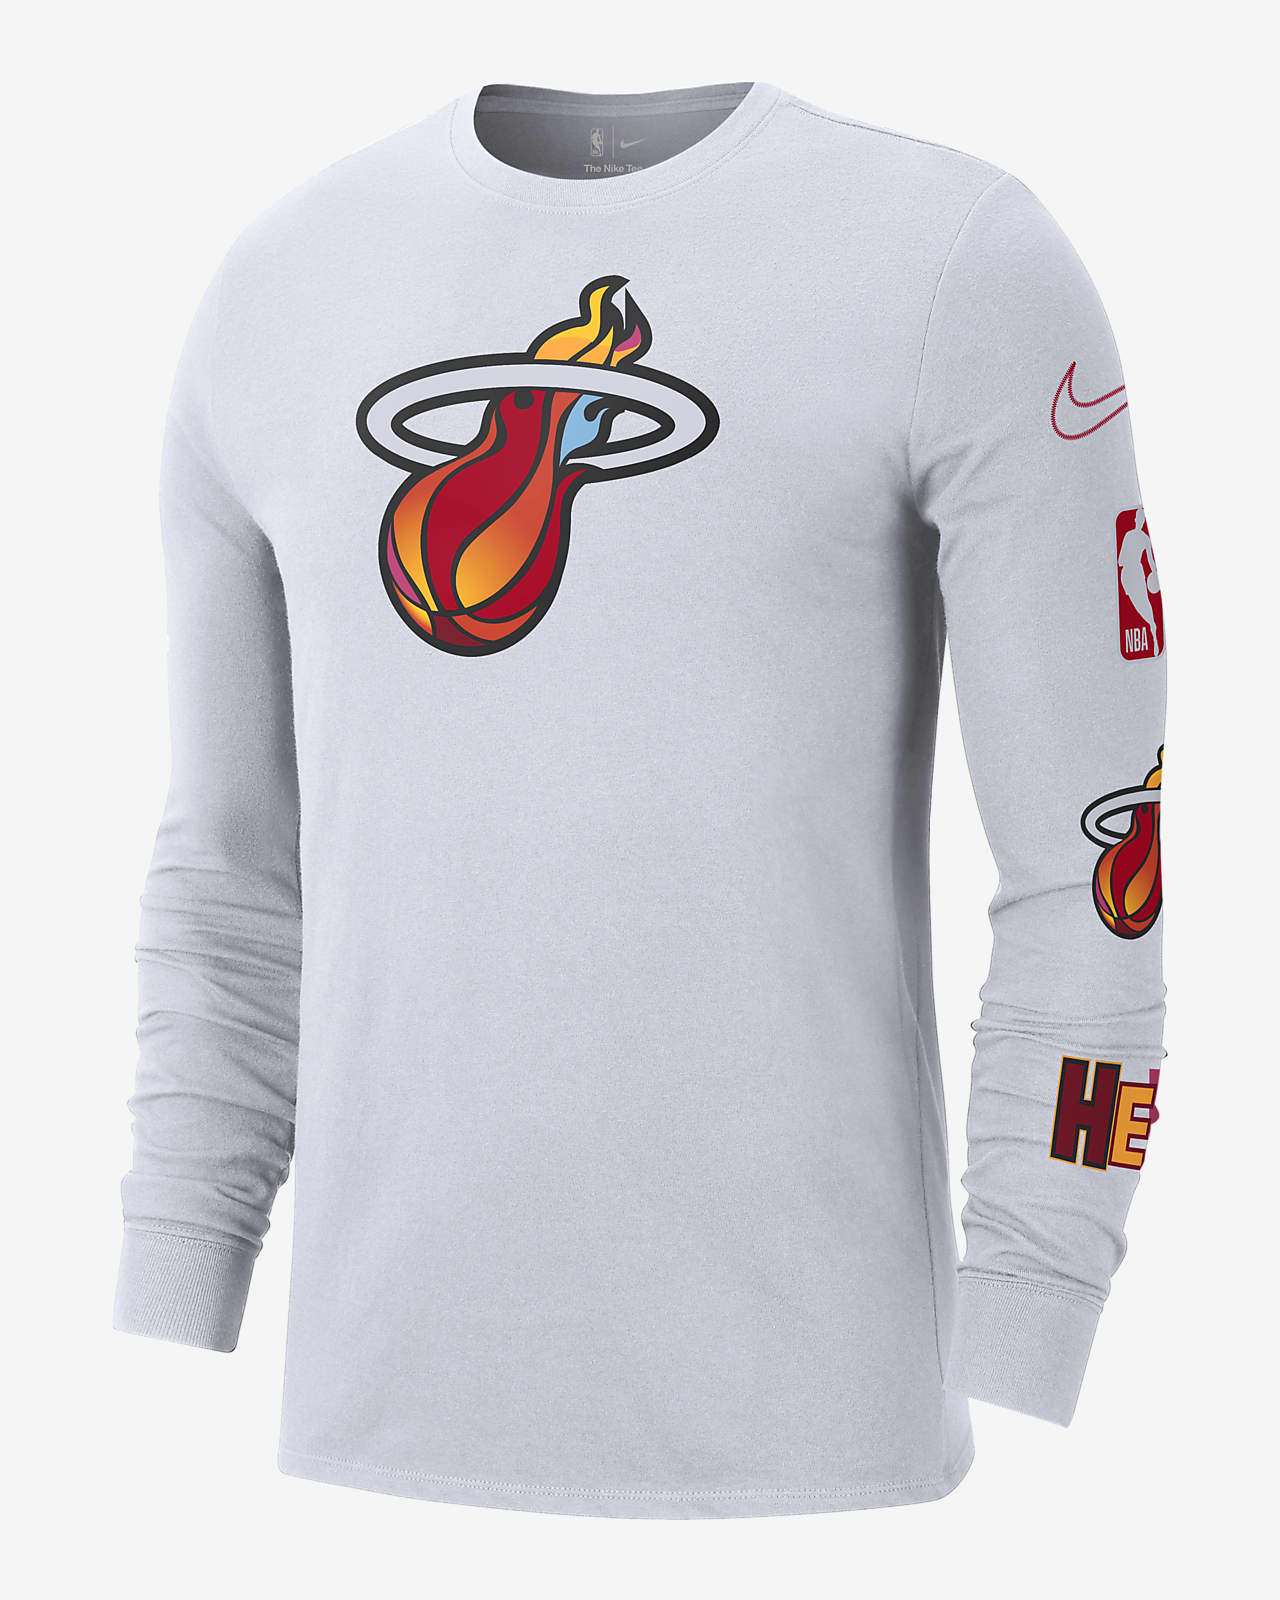 Derrick White Miami Heat White Hot 2023 NBA Playoffs shirt, hoodie,  sweater, long sleeve and tank top